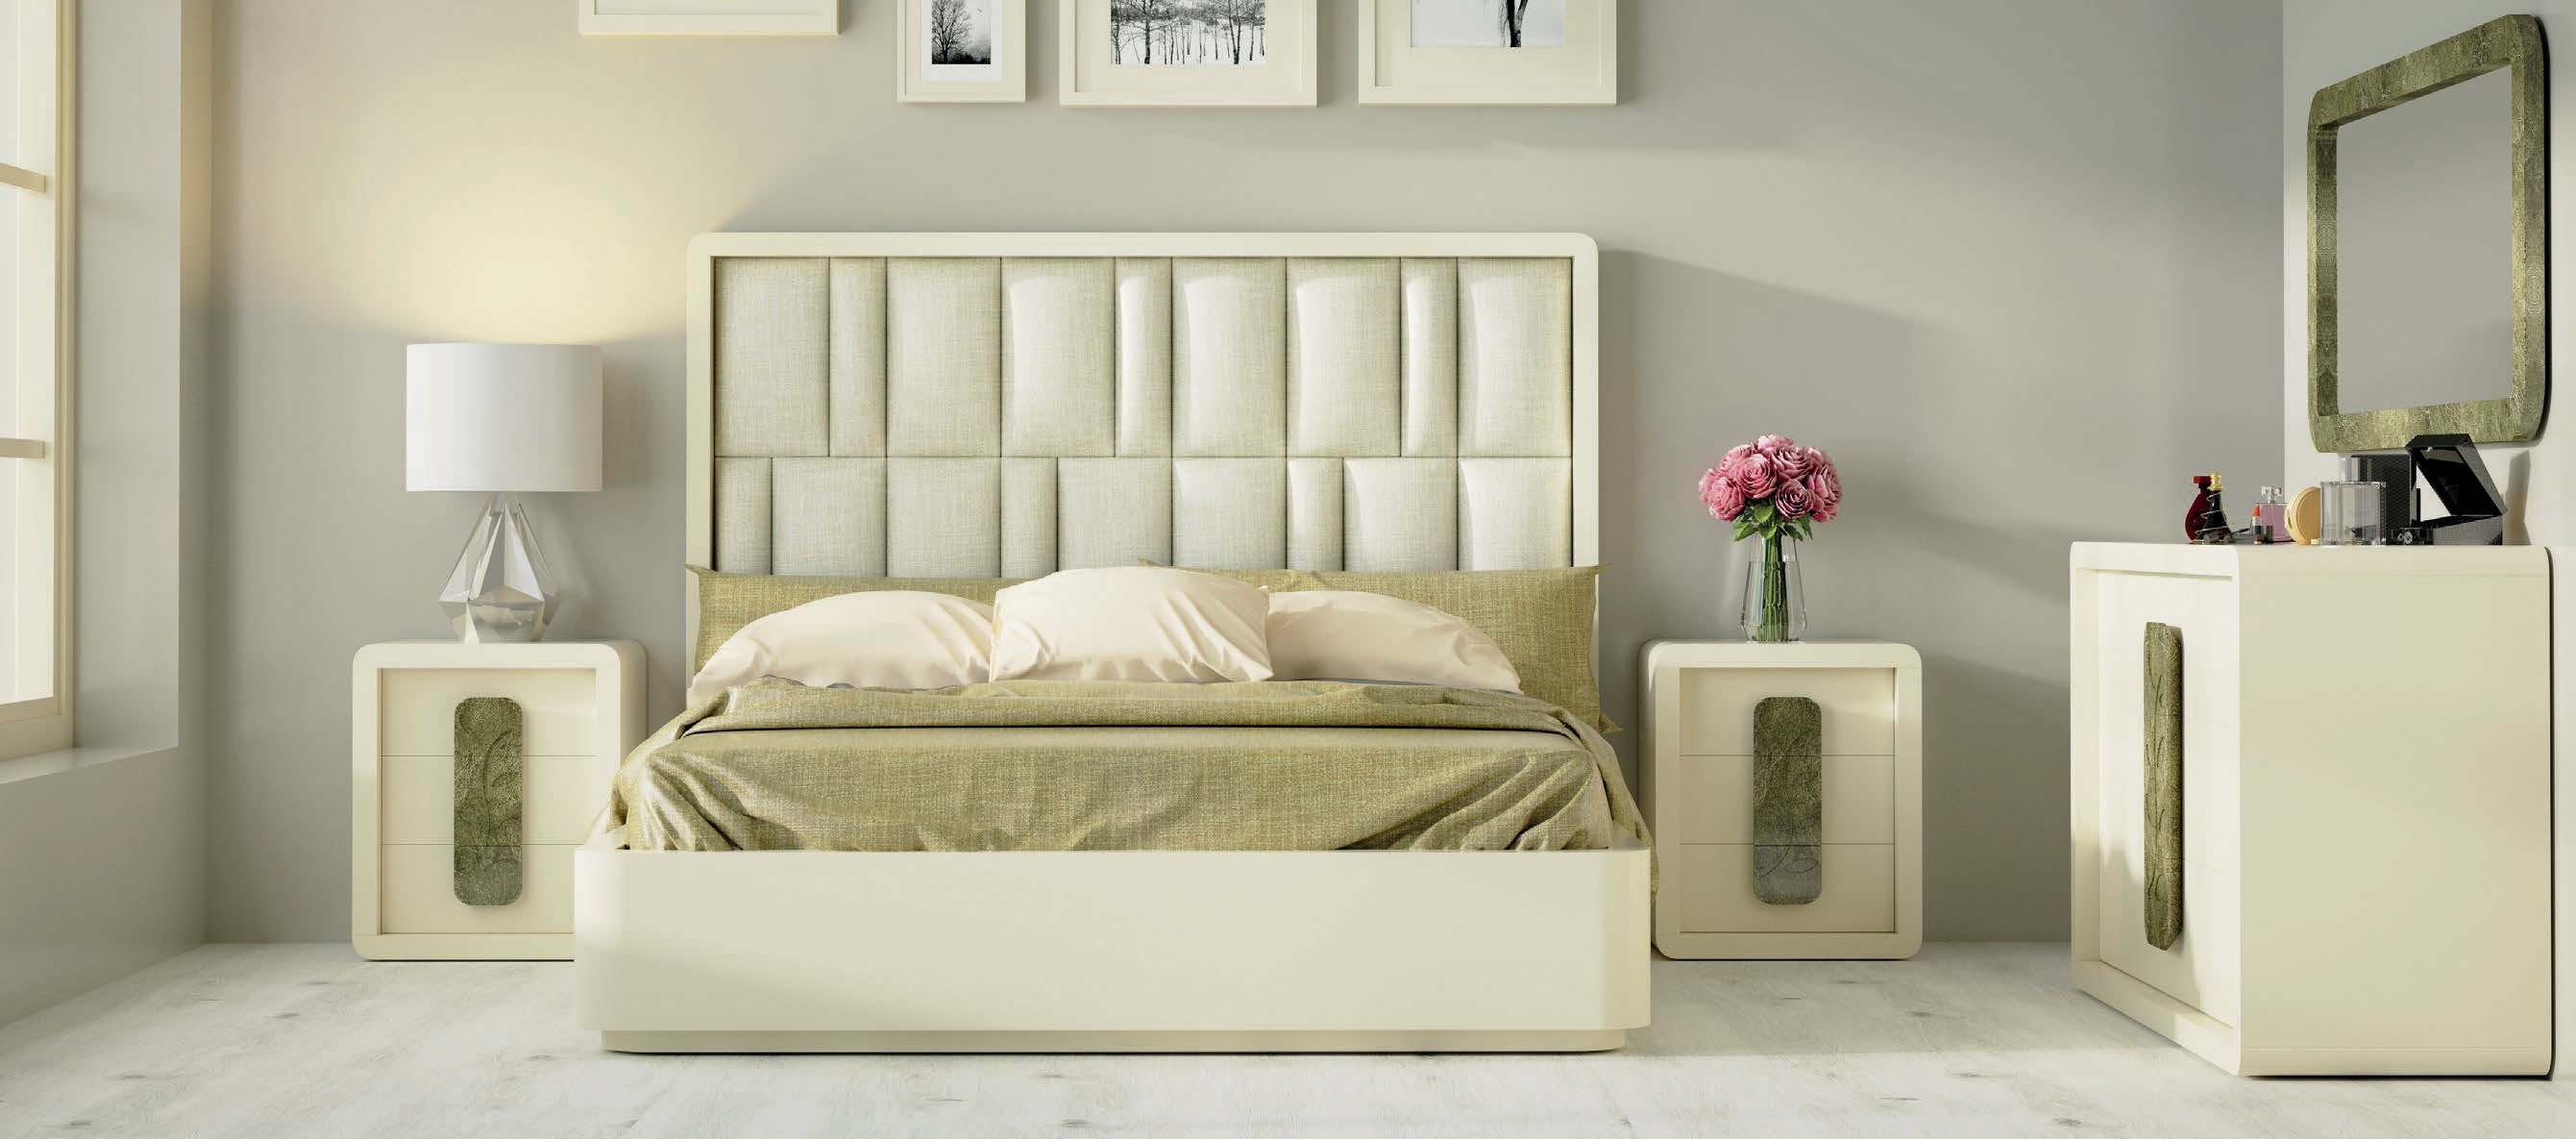 Brands Franco Furniture Bedrooms vol2, Spain DOR 169